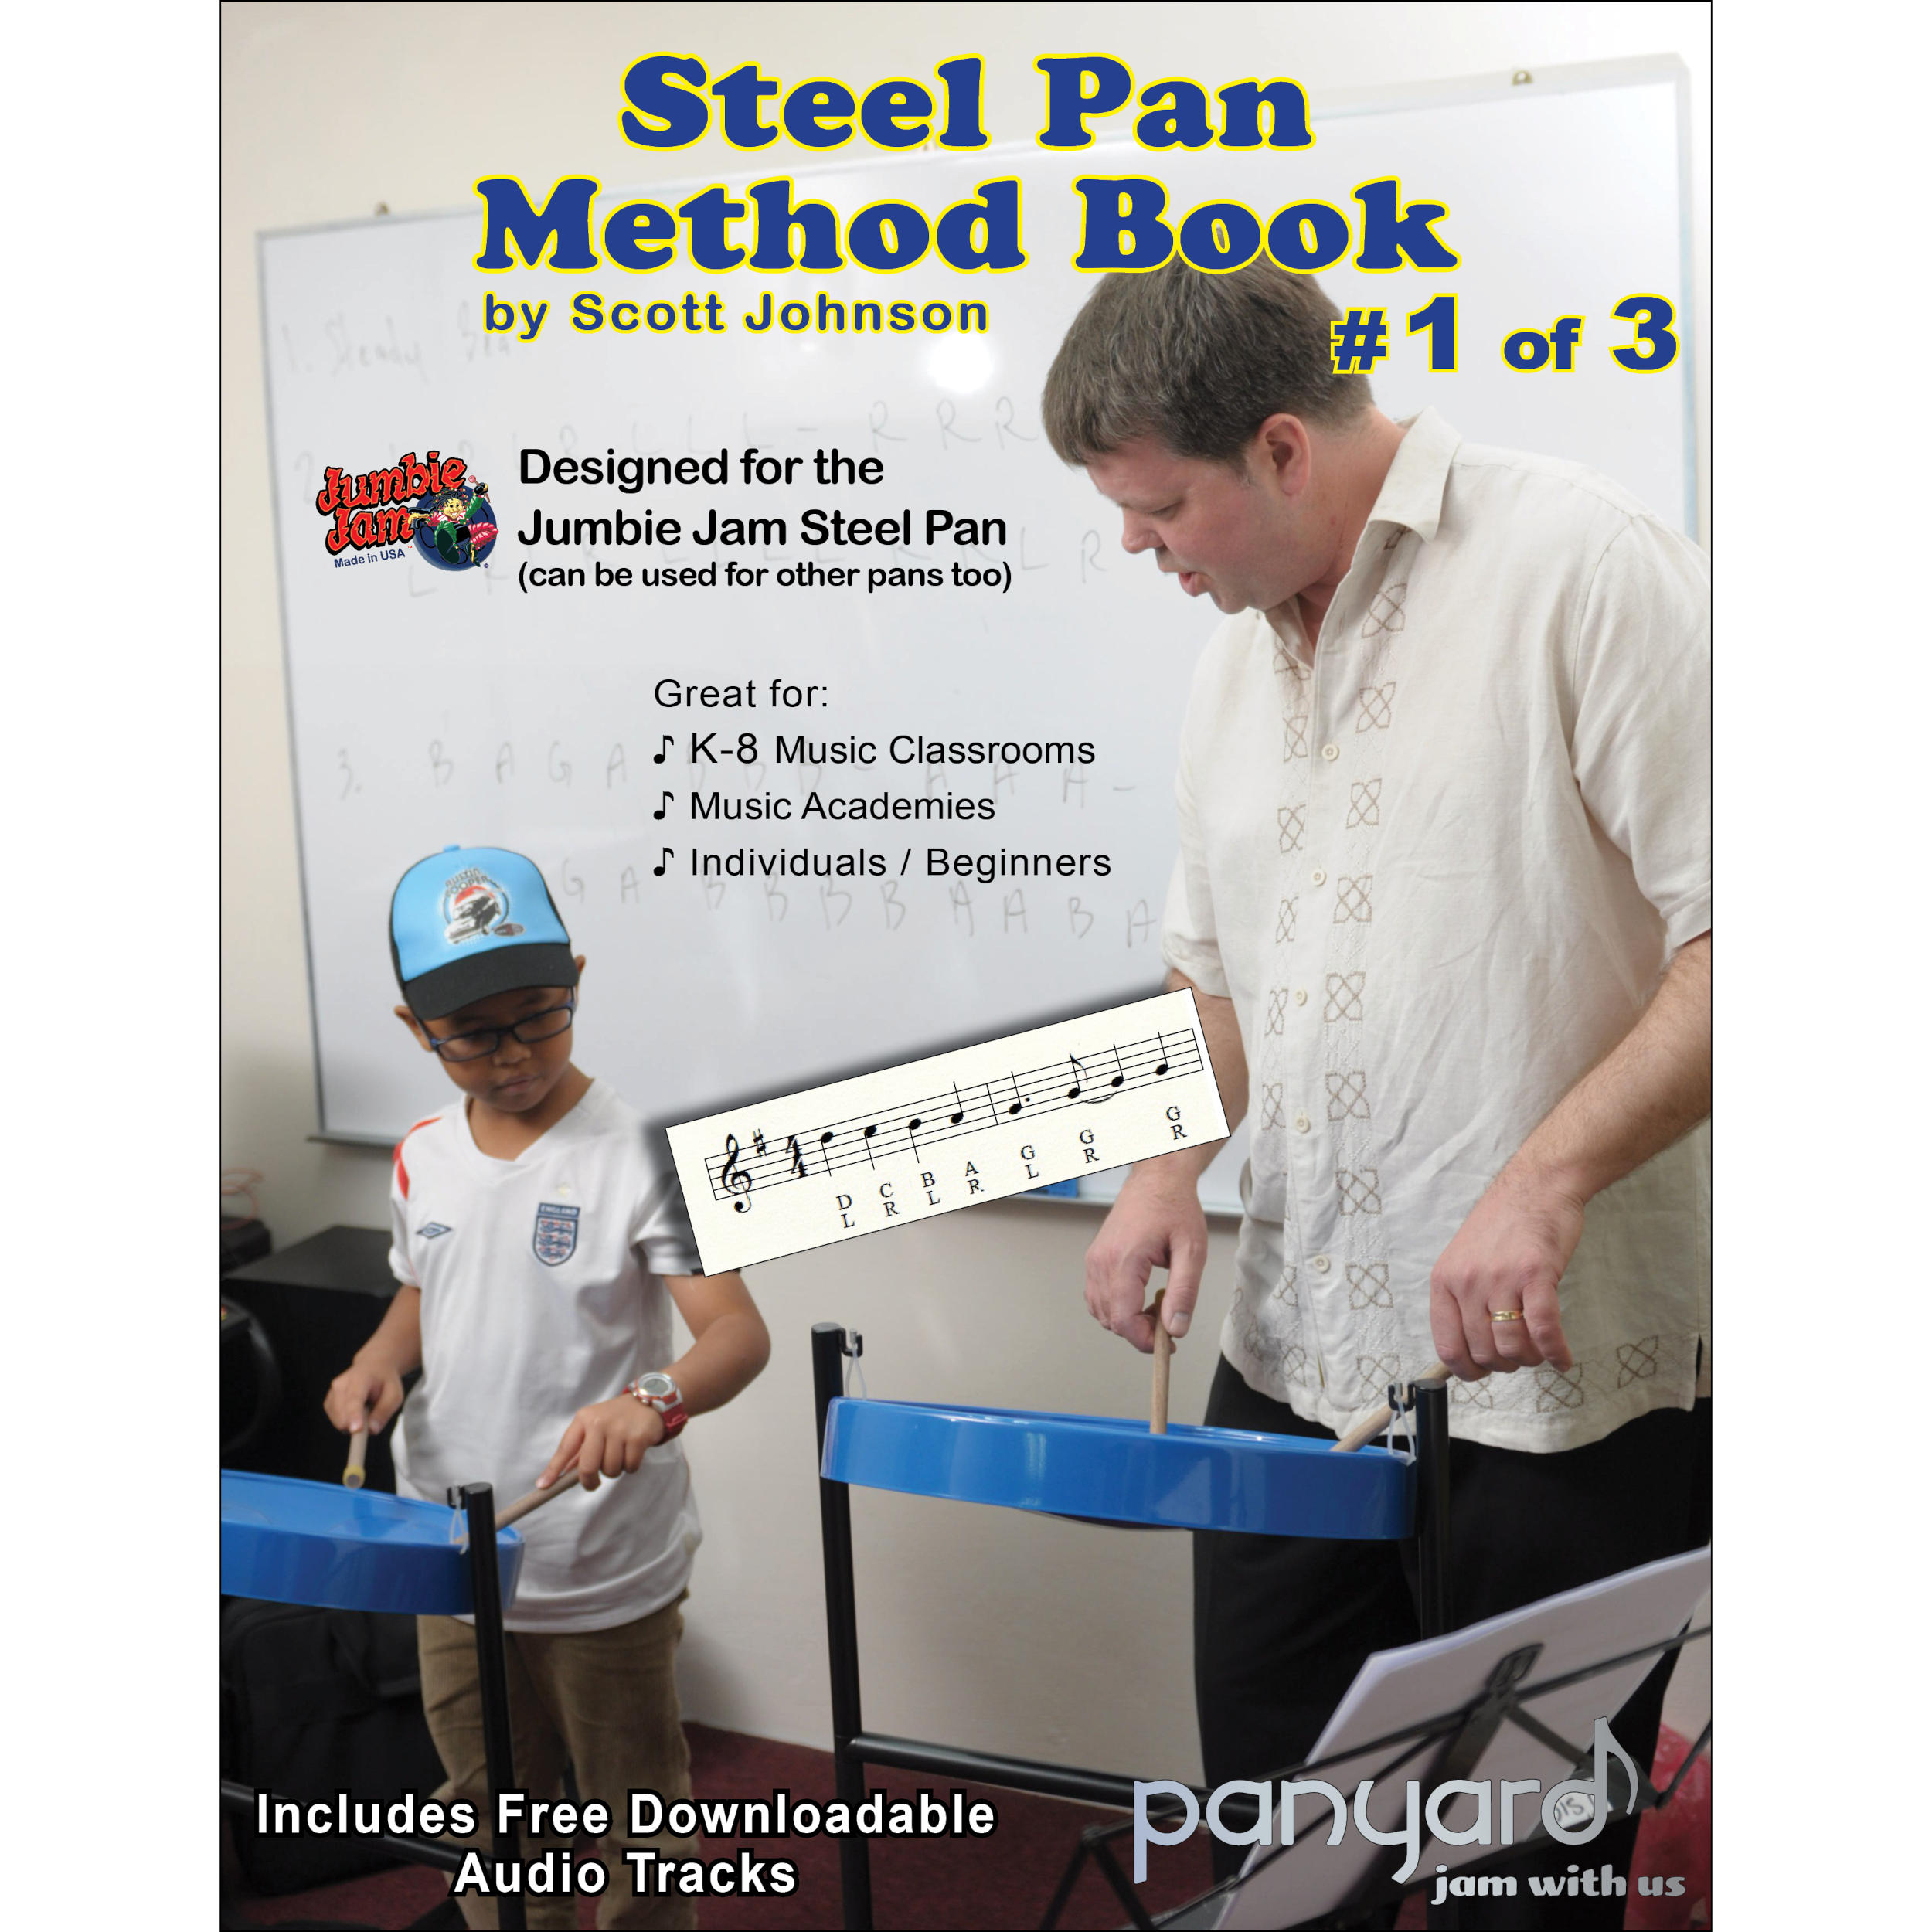 Panyard Jumbie Jam Steel Pan Method Book 1 of 3